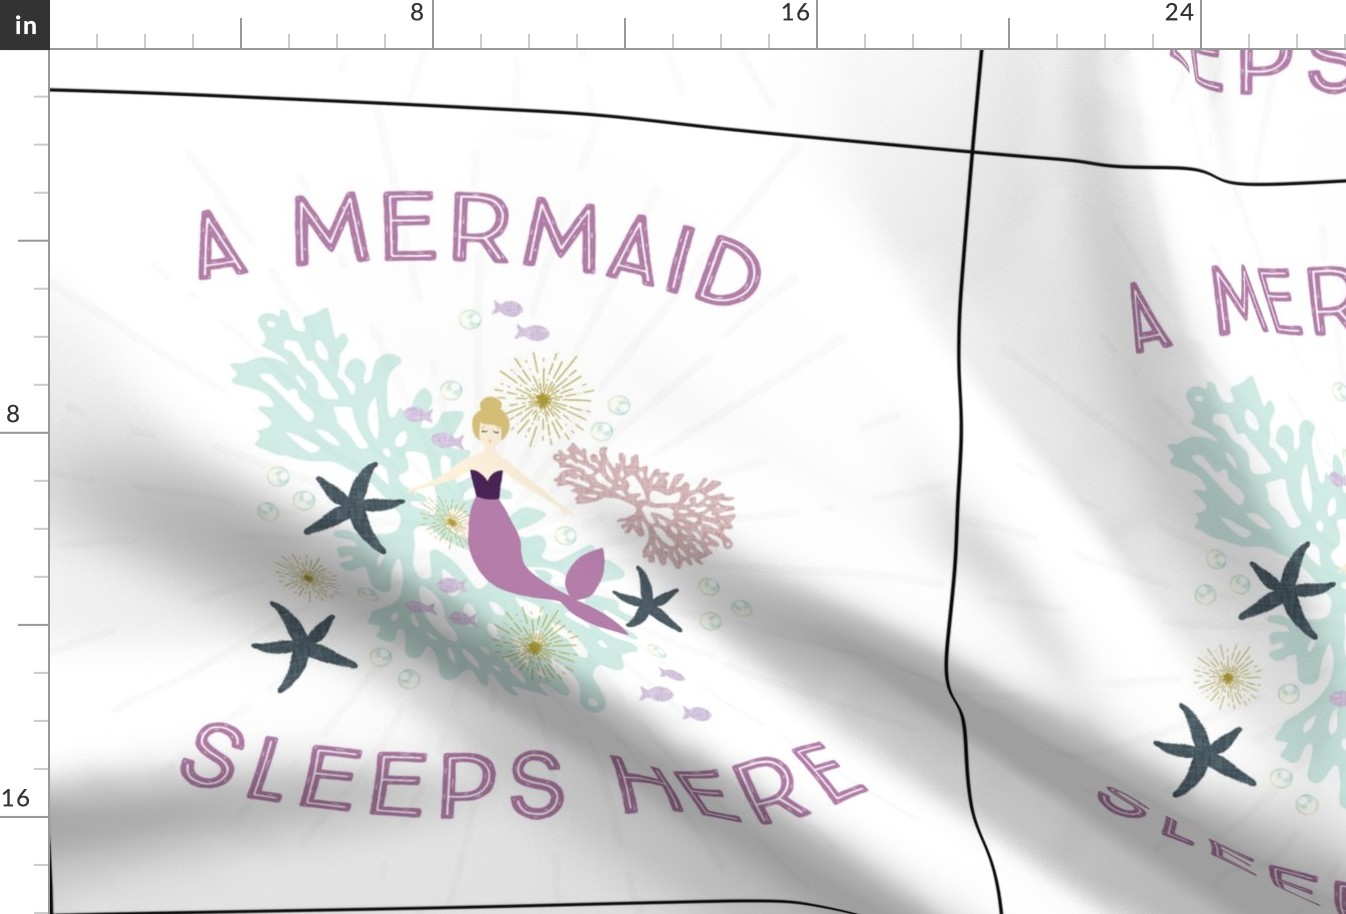 6 loveys: a mermaid sleeps here // laguna